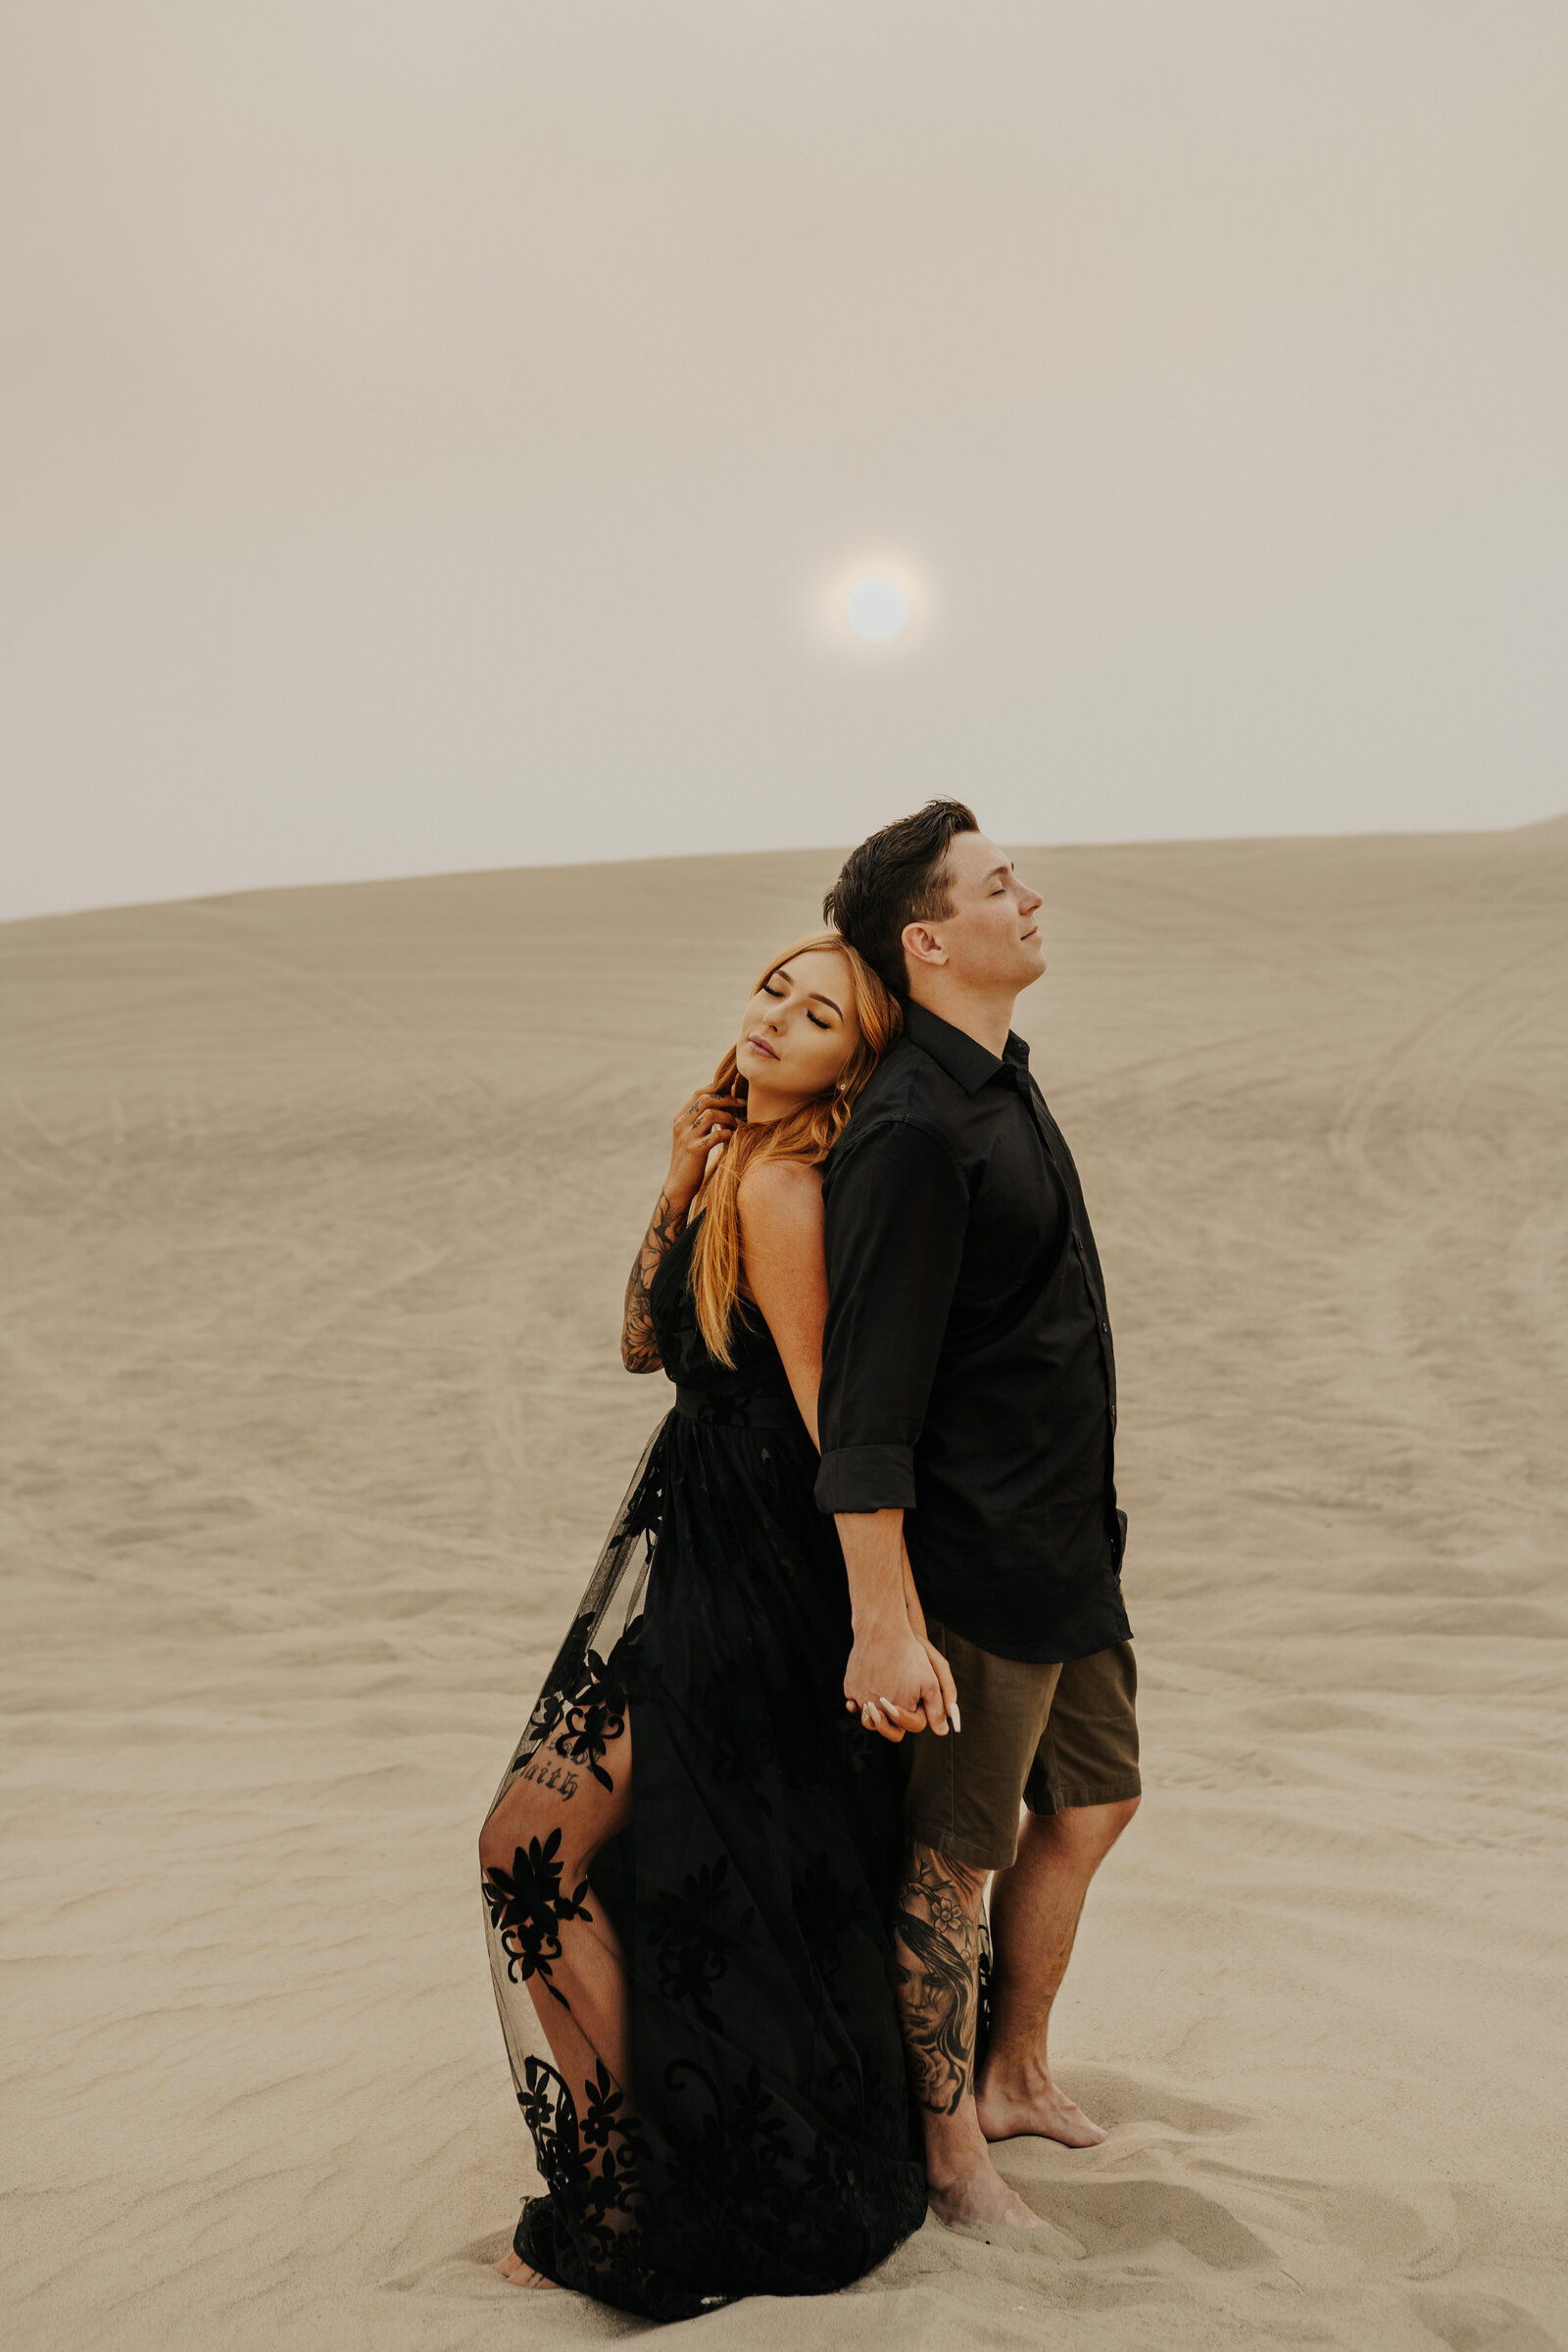 Sand Dunes Couples Photos - Raquel King Photography21